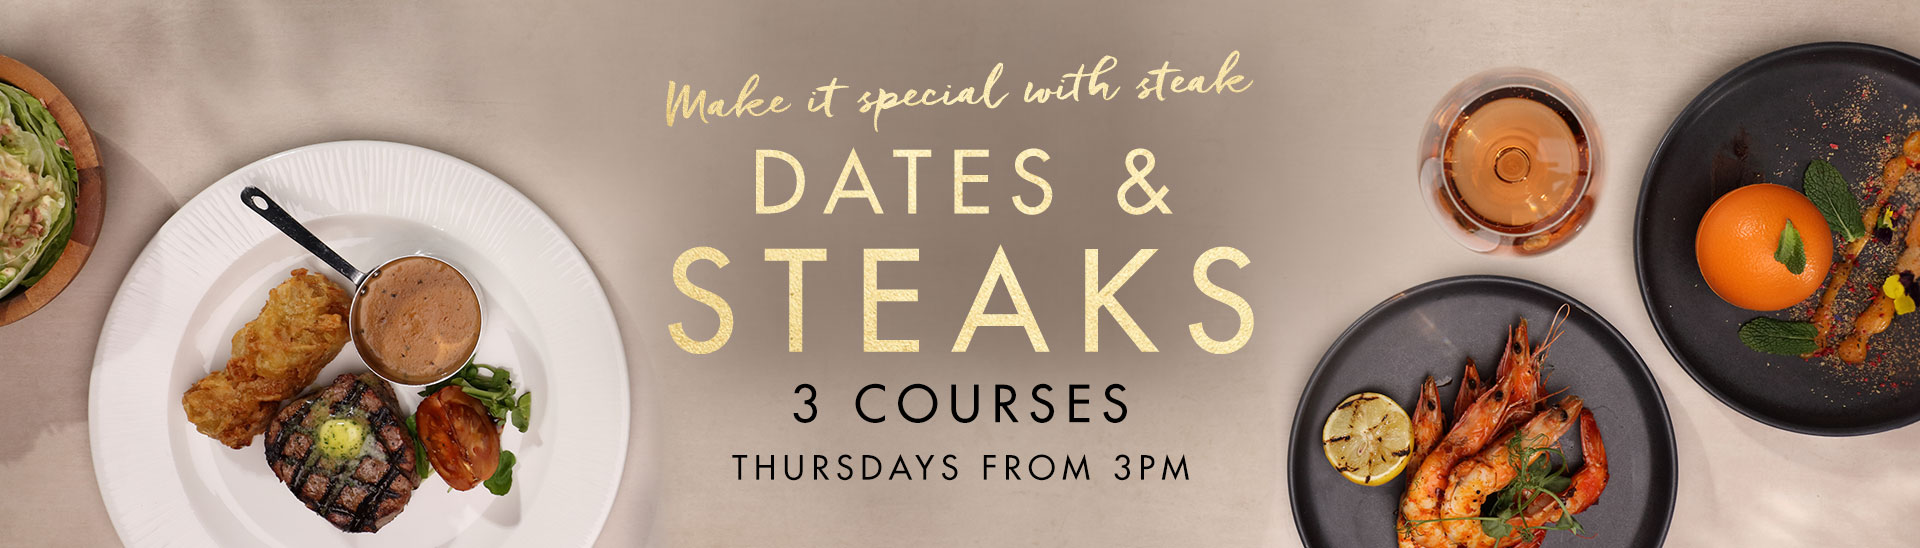 Dates & Steaks at Miller & Carter Haywards Heath